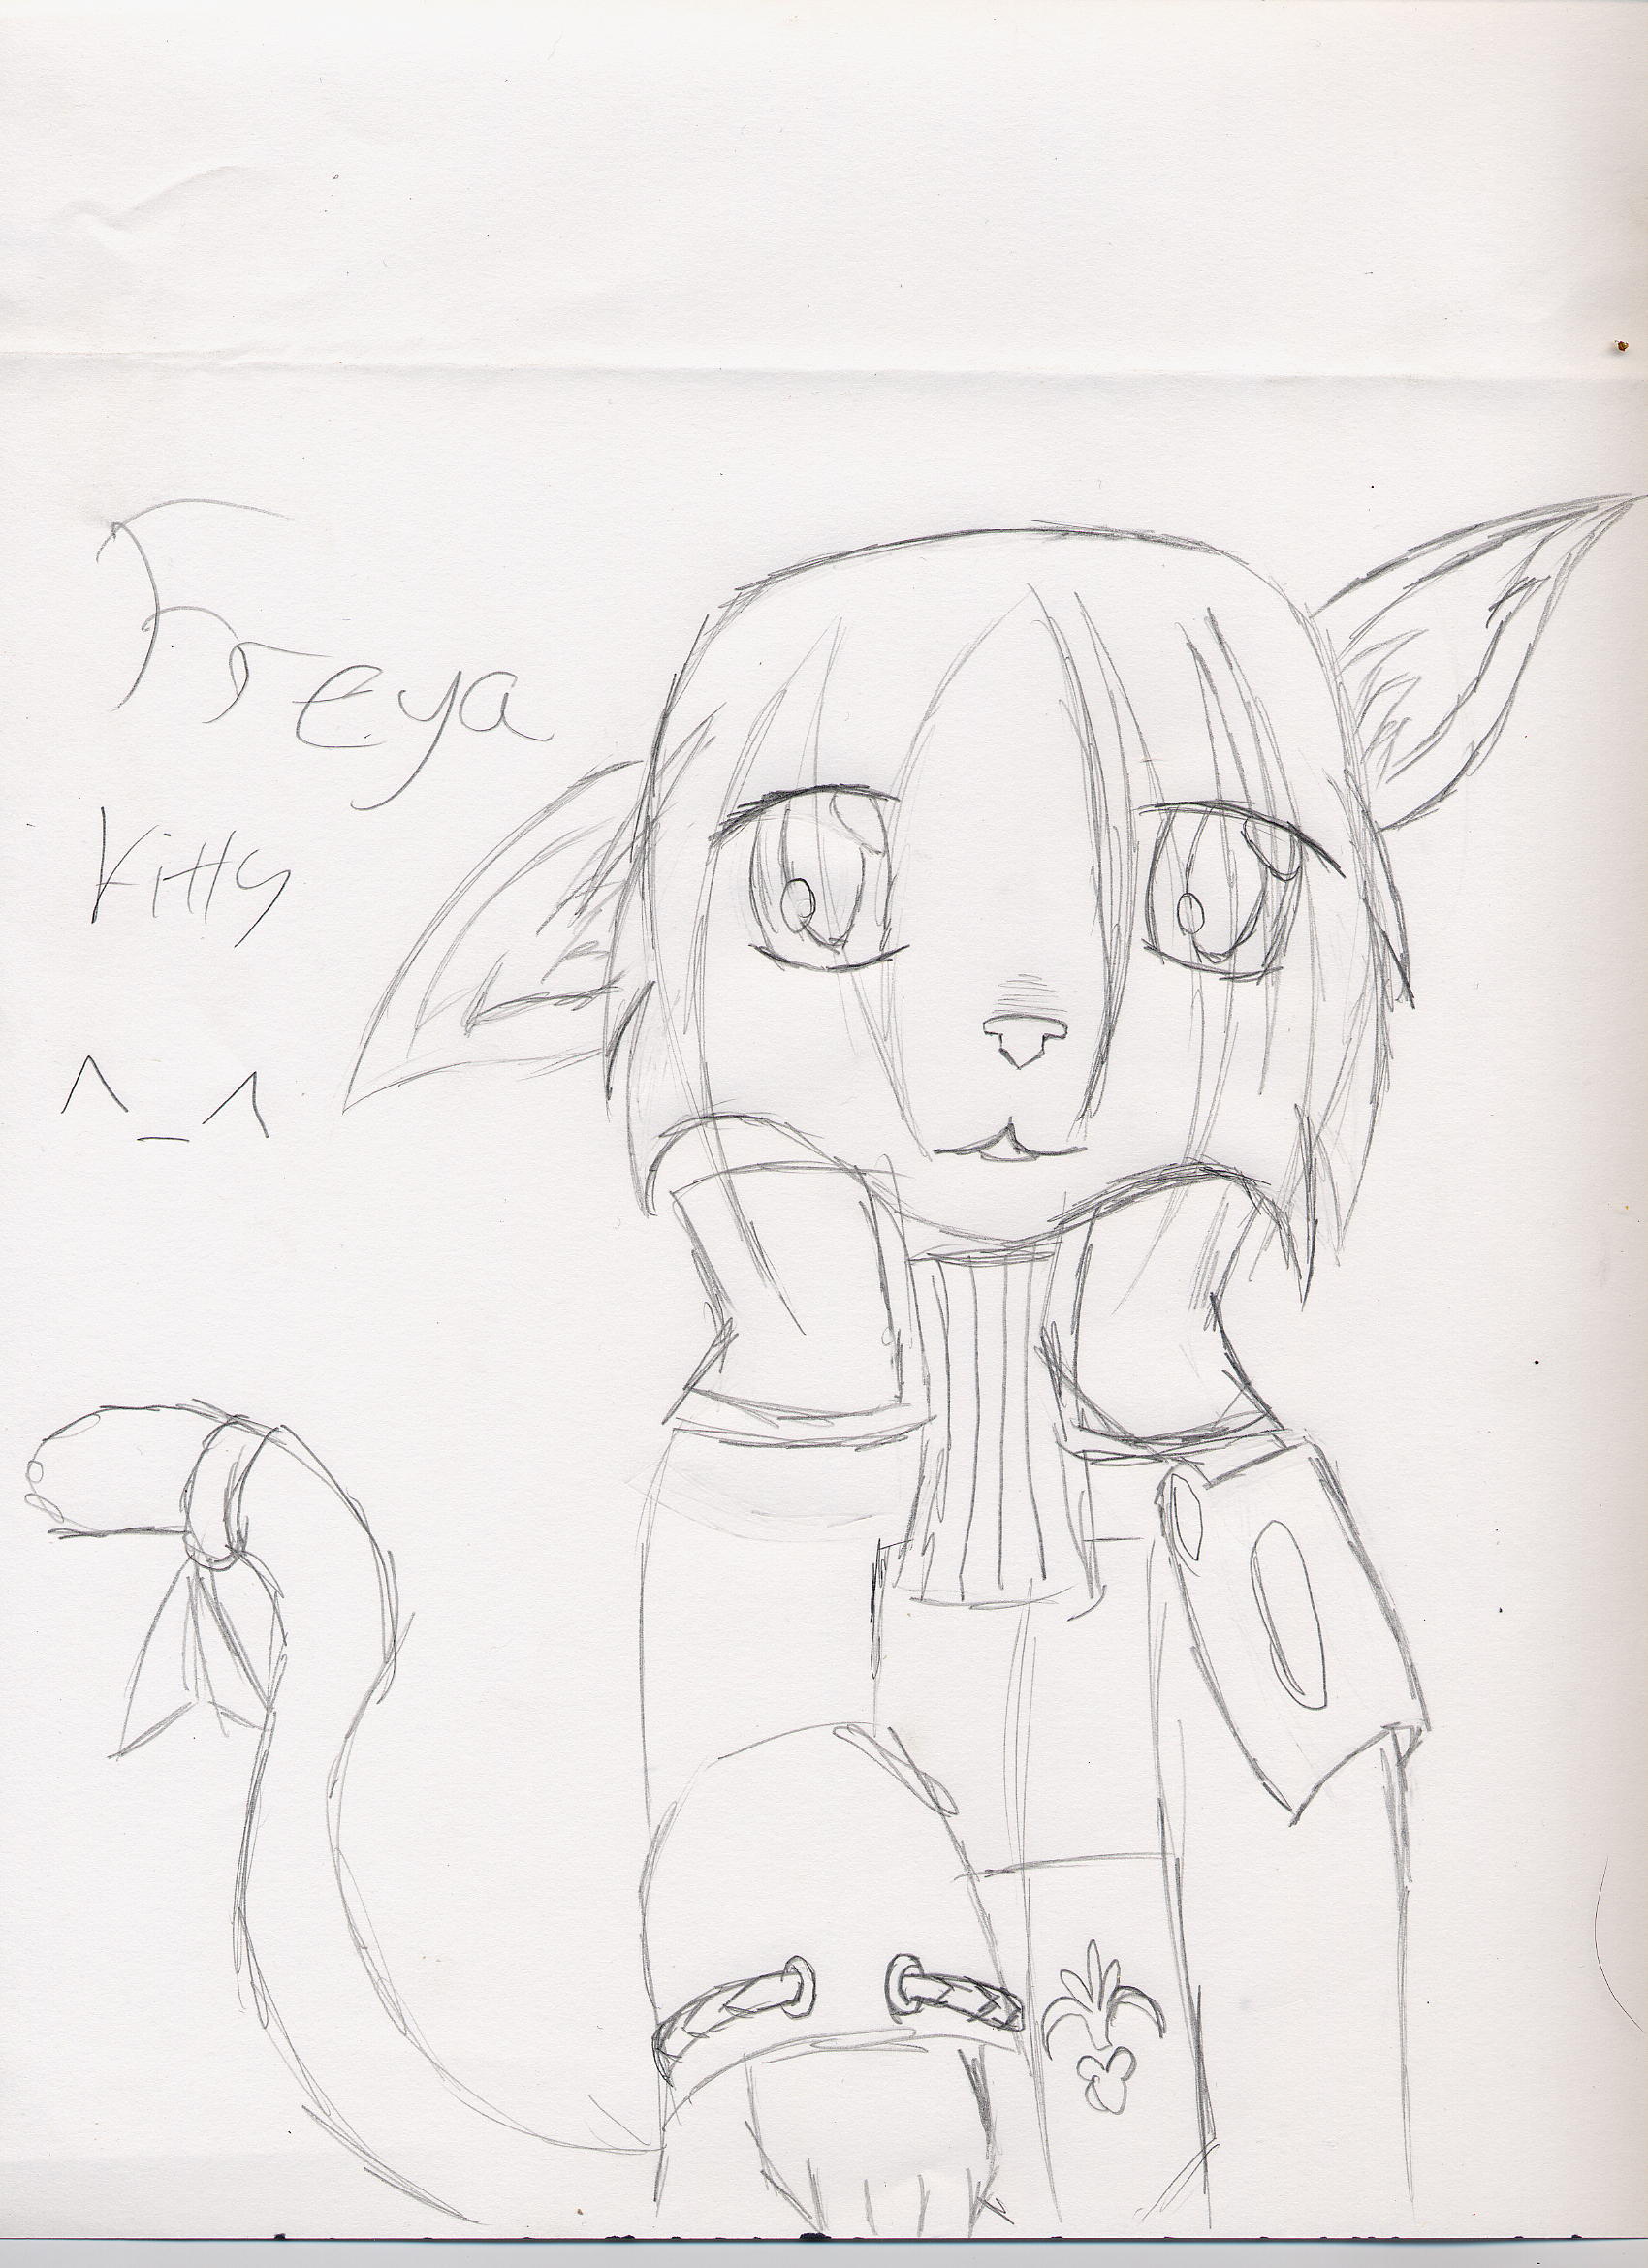 Freya Kitty by ZidanesGirl